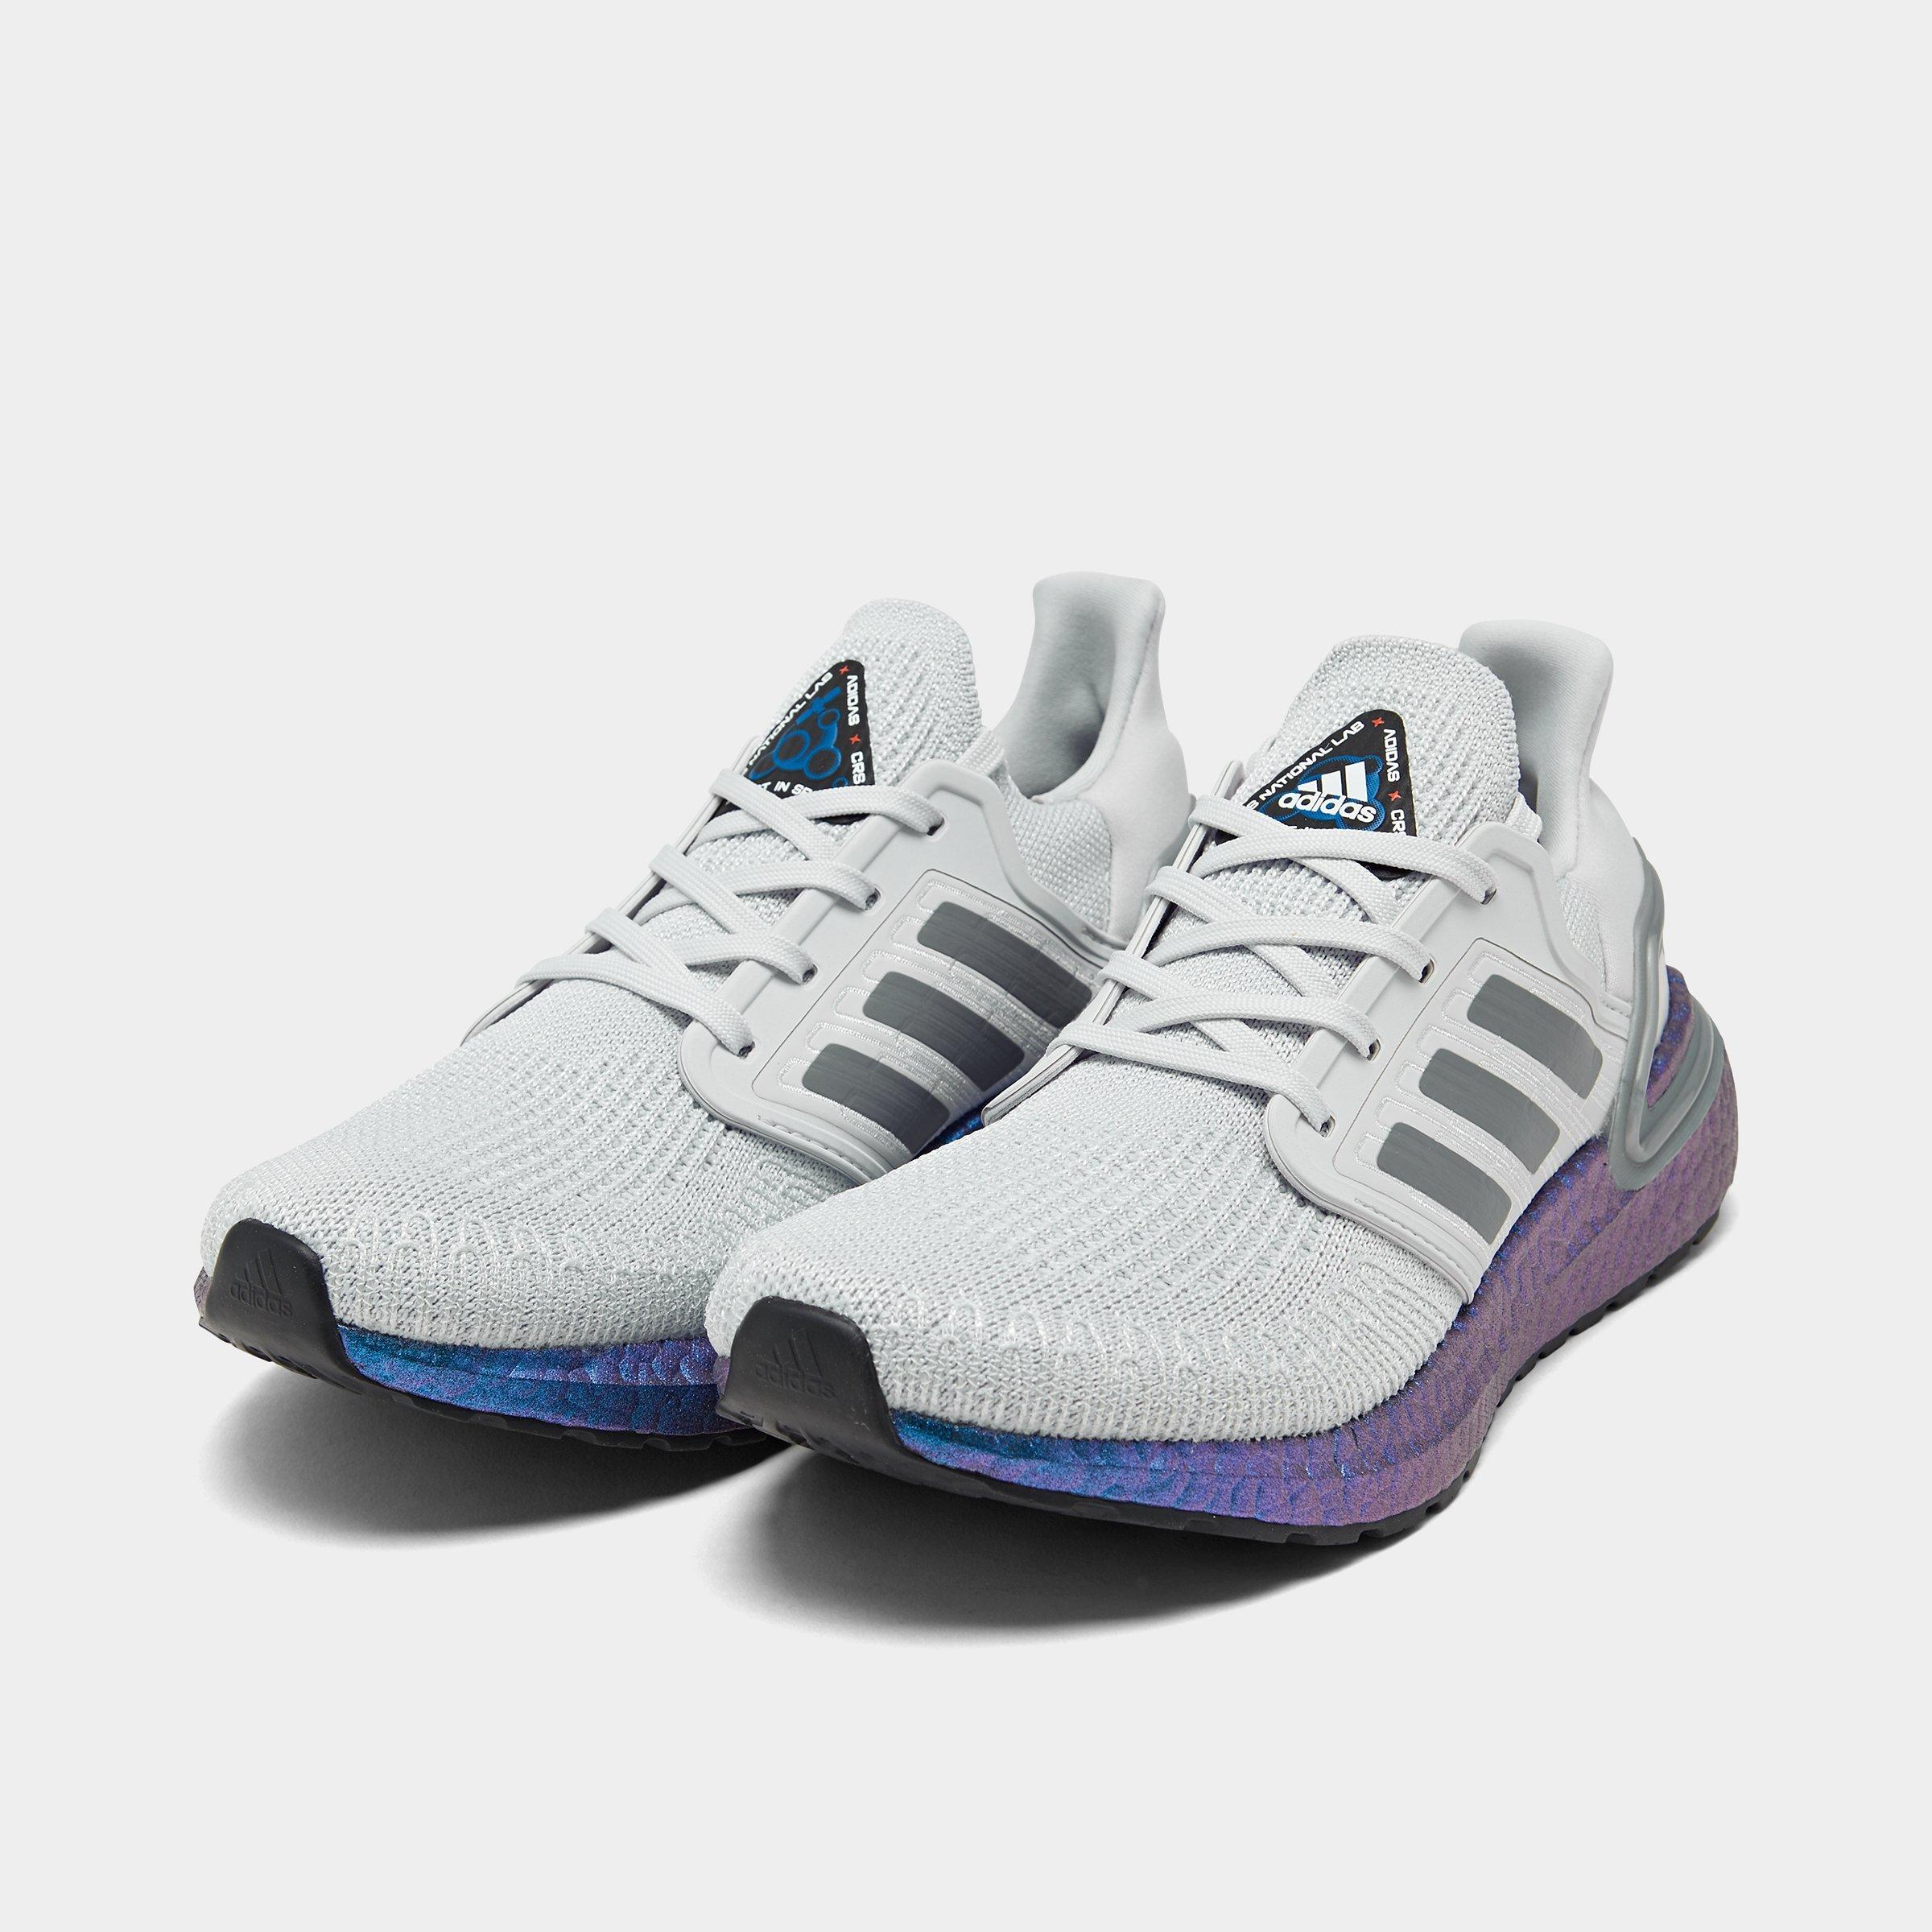 ultraboost tennis shoes